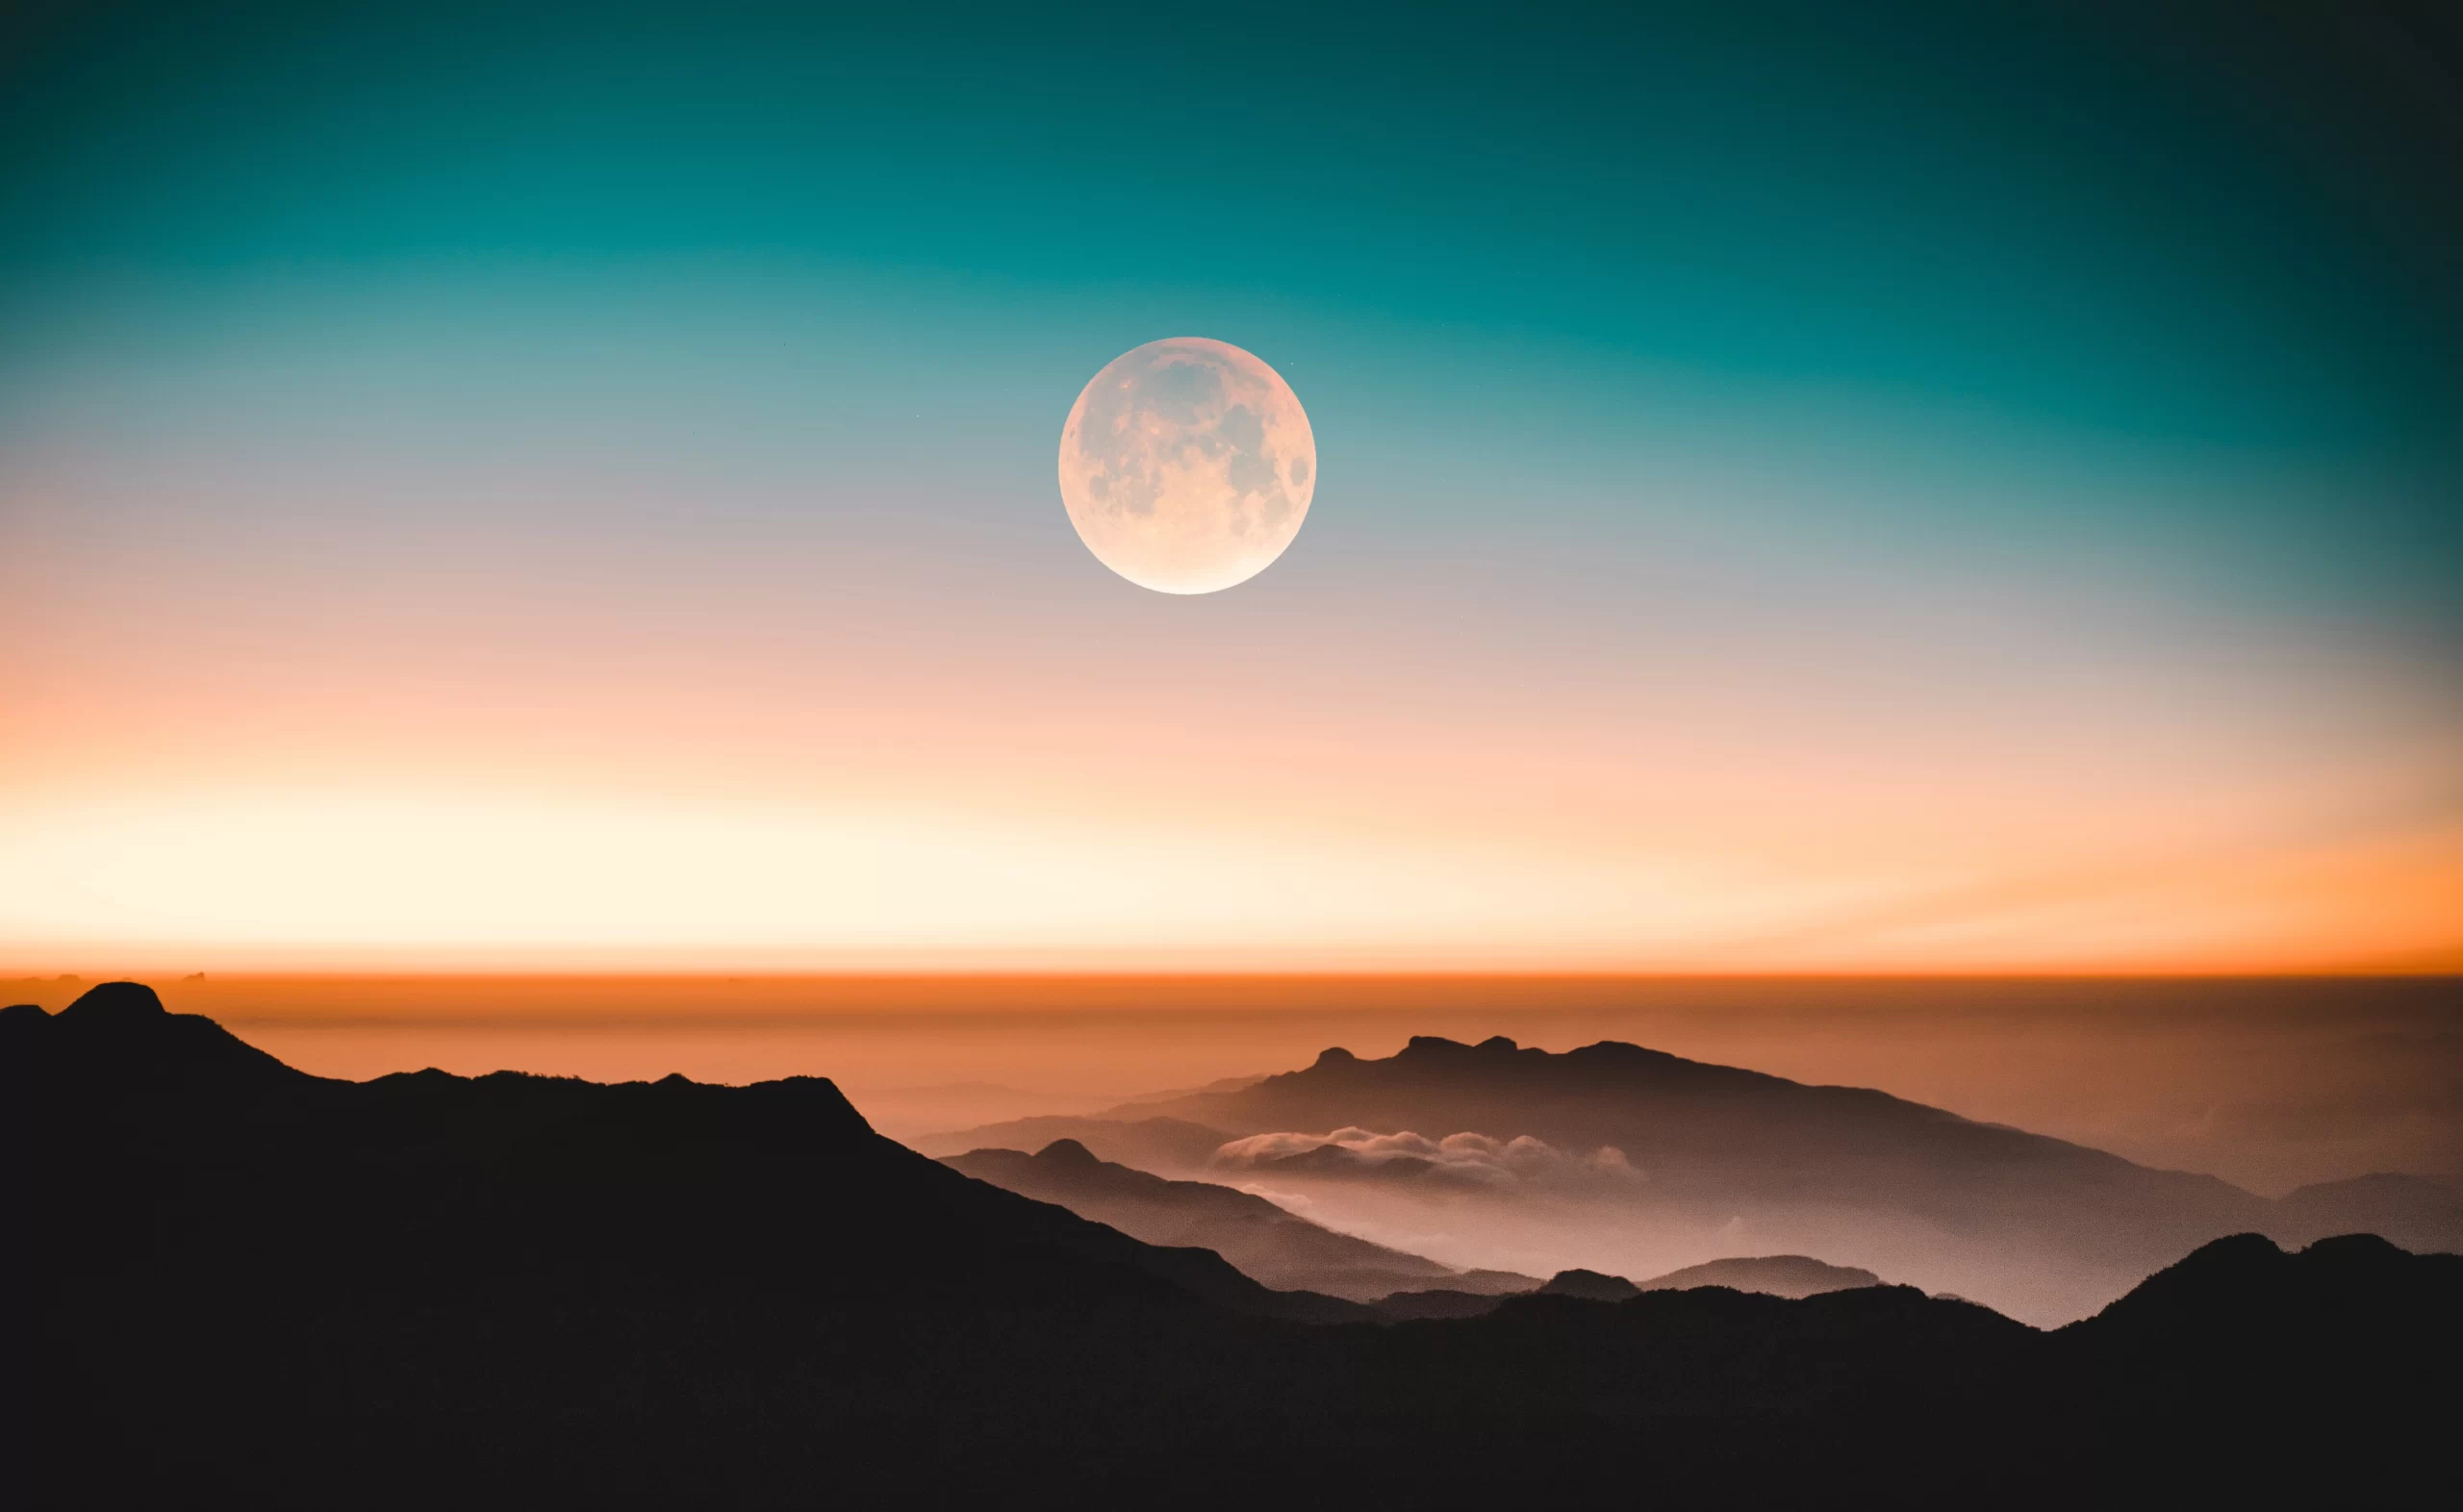 malith-d-karunarathne-Moon over desert scape evening-unsplash